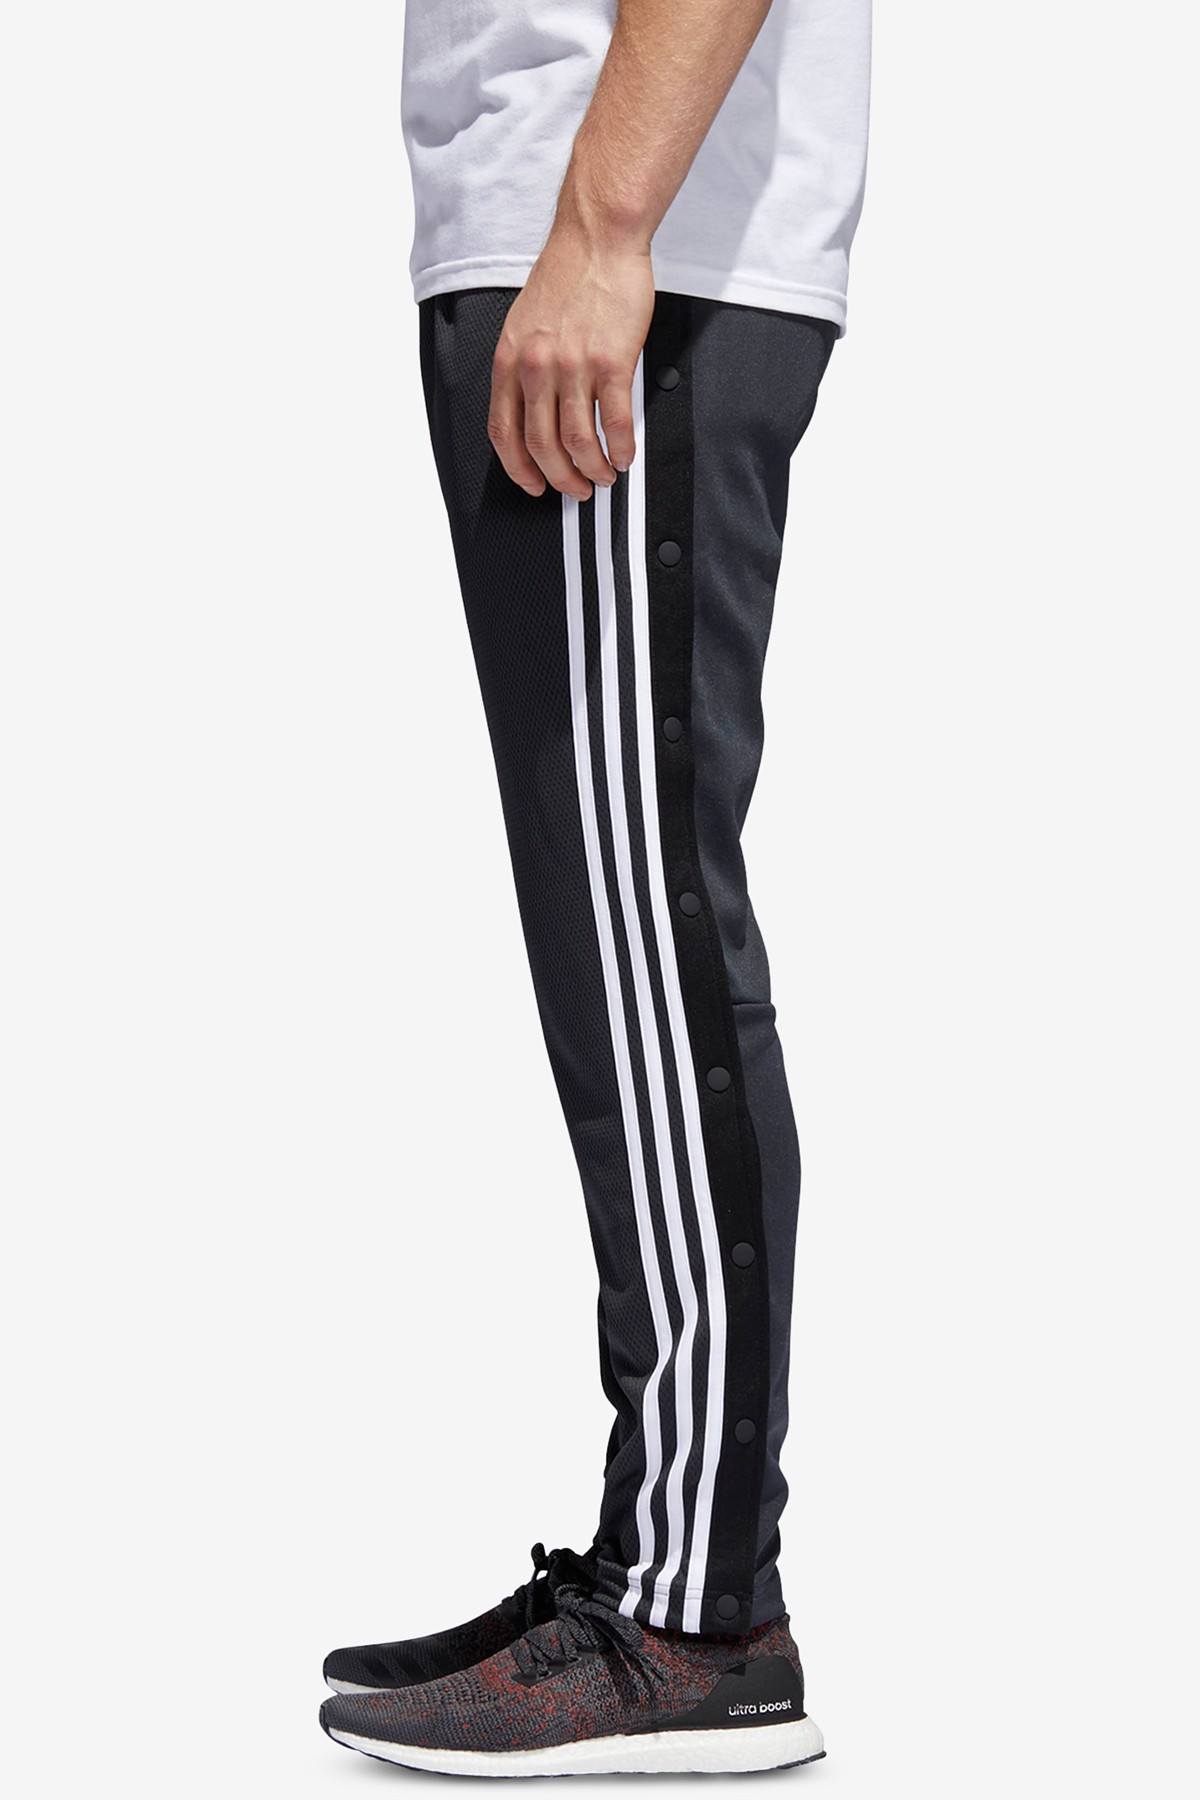 adidas Men's Essentials Fleece Tapered Pants Black – CheapUndies